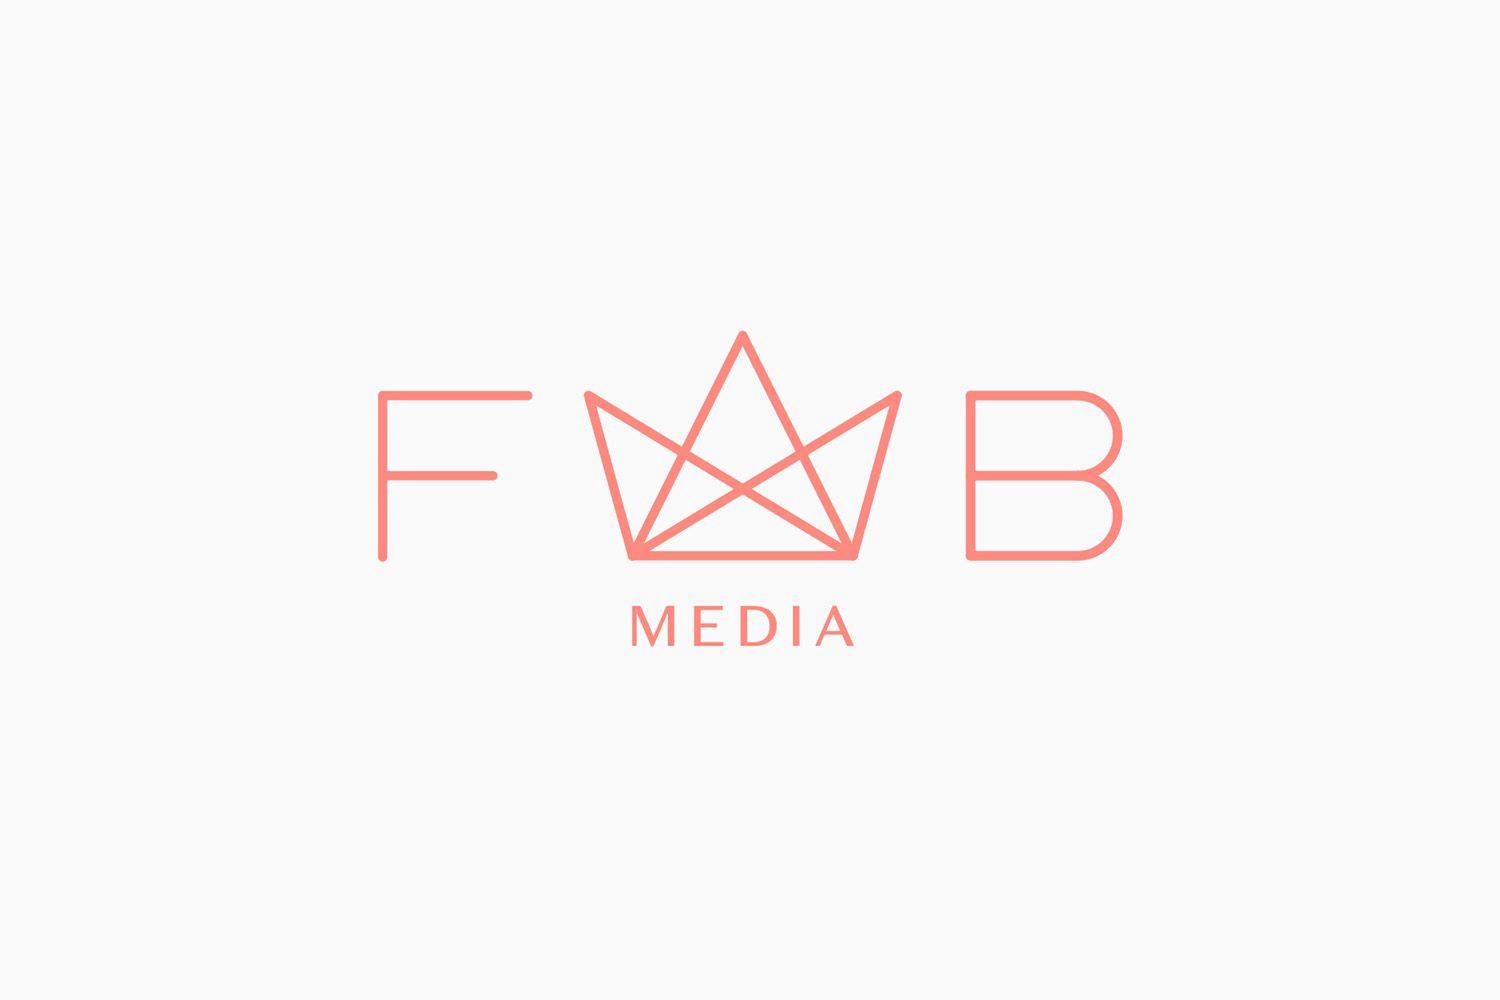 Media Company Logo - New Logo & Branding for Fab Media by Bedow — BP&O